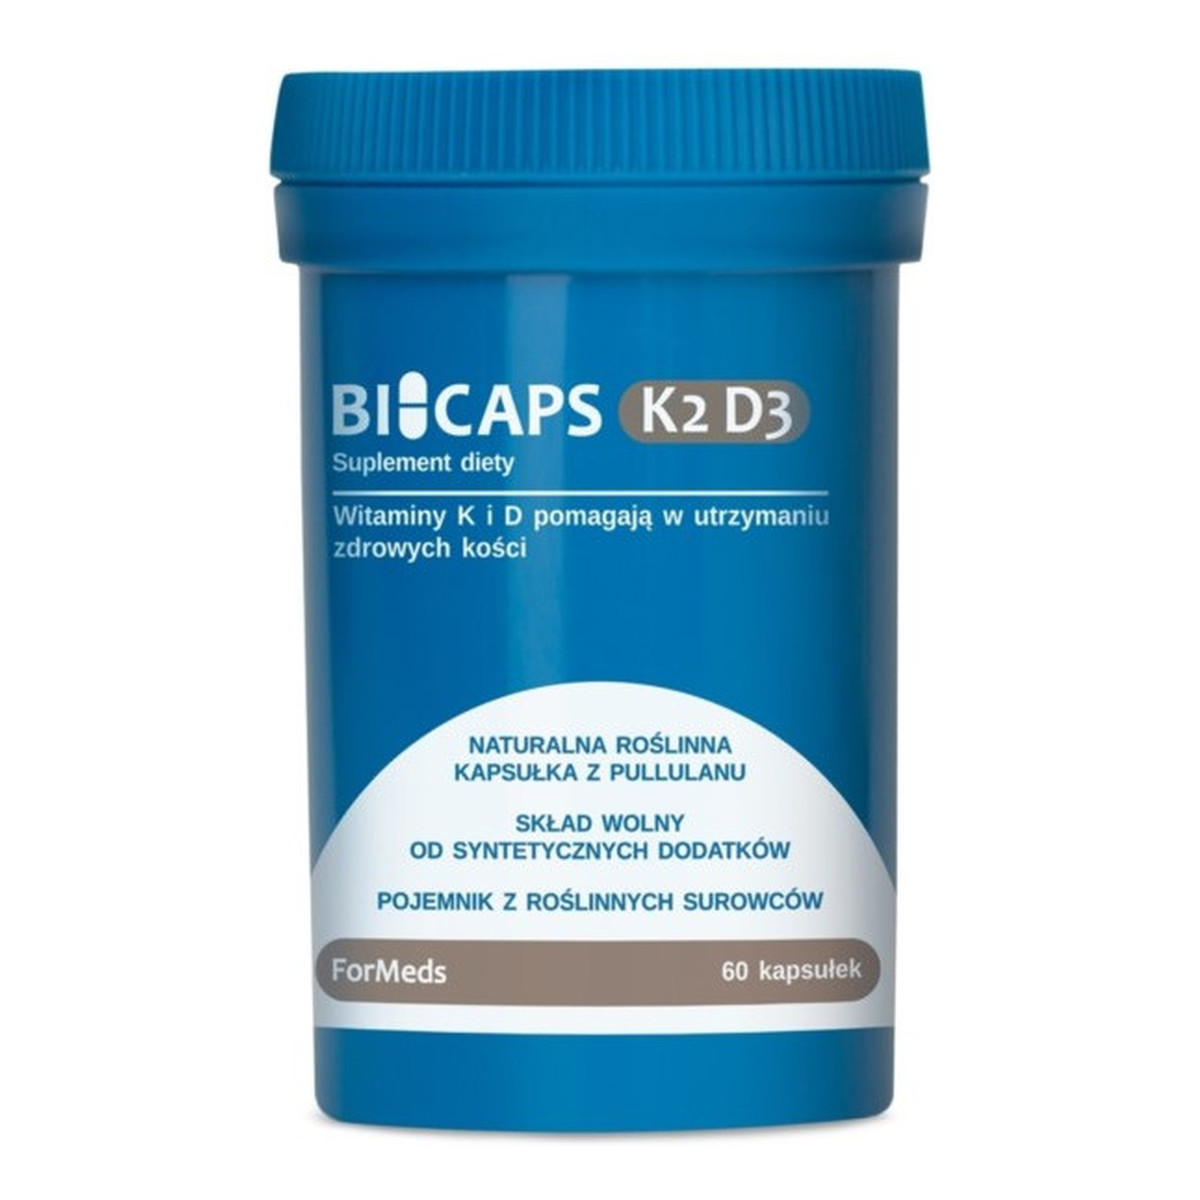 Formeds Bicaps K2 D3 suplement diety 60 kapsułek